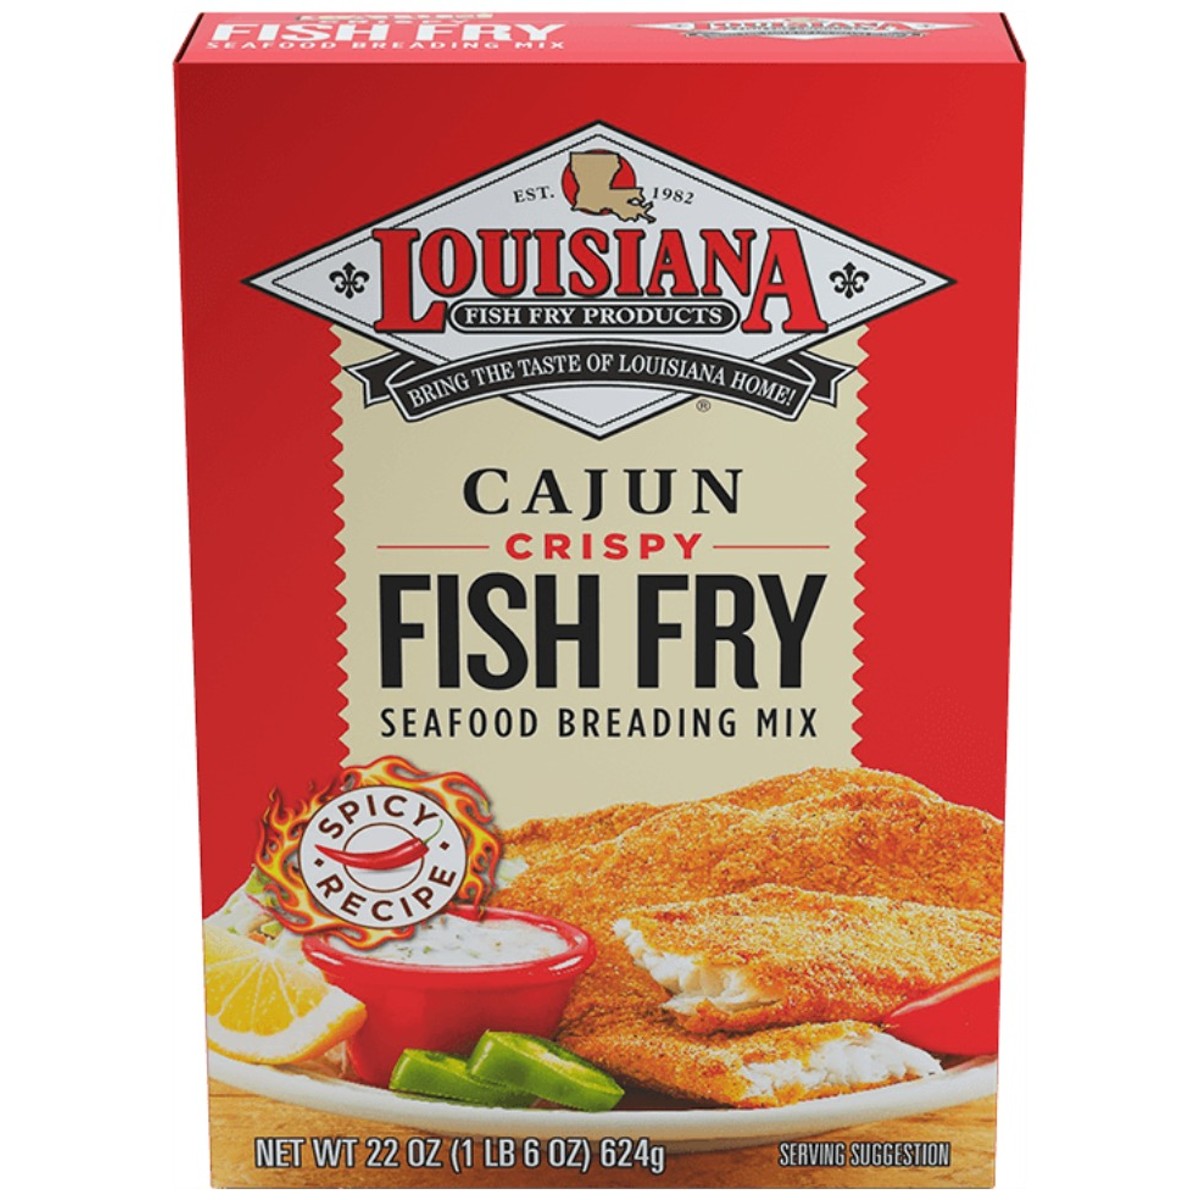 Cajun Fire Hot Sauce 8 FL OZ - 2 pk - Louisiana Fish Fry Products